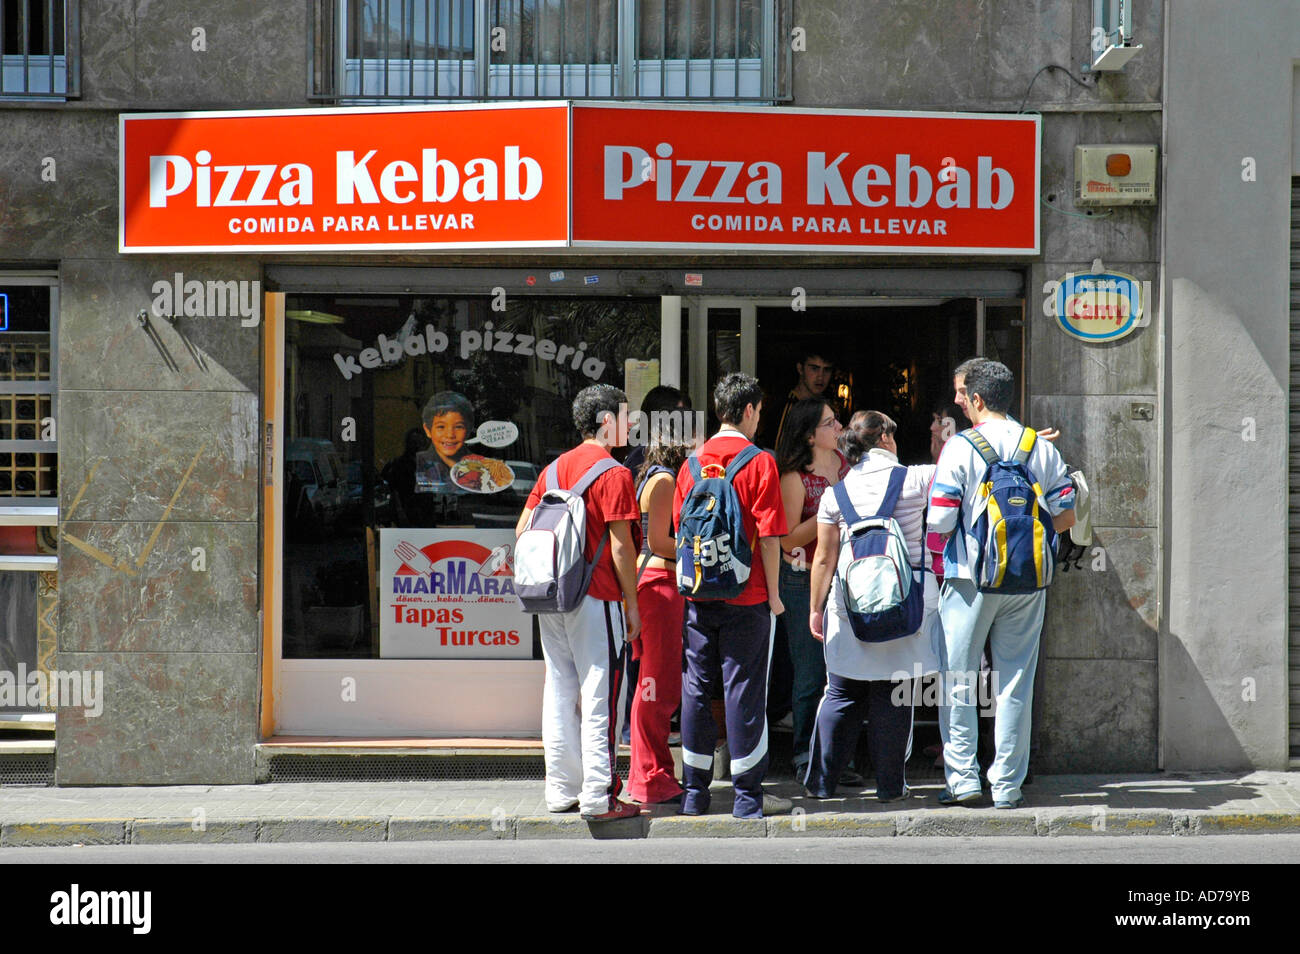 School children with rucksacks jostleling into the door of a pizza and kebab shope, Elx, Elche, Costa Blanca, Spain Stock Photo